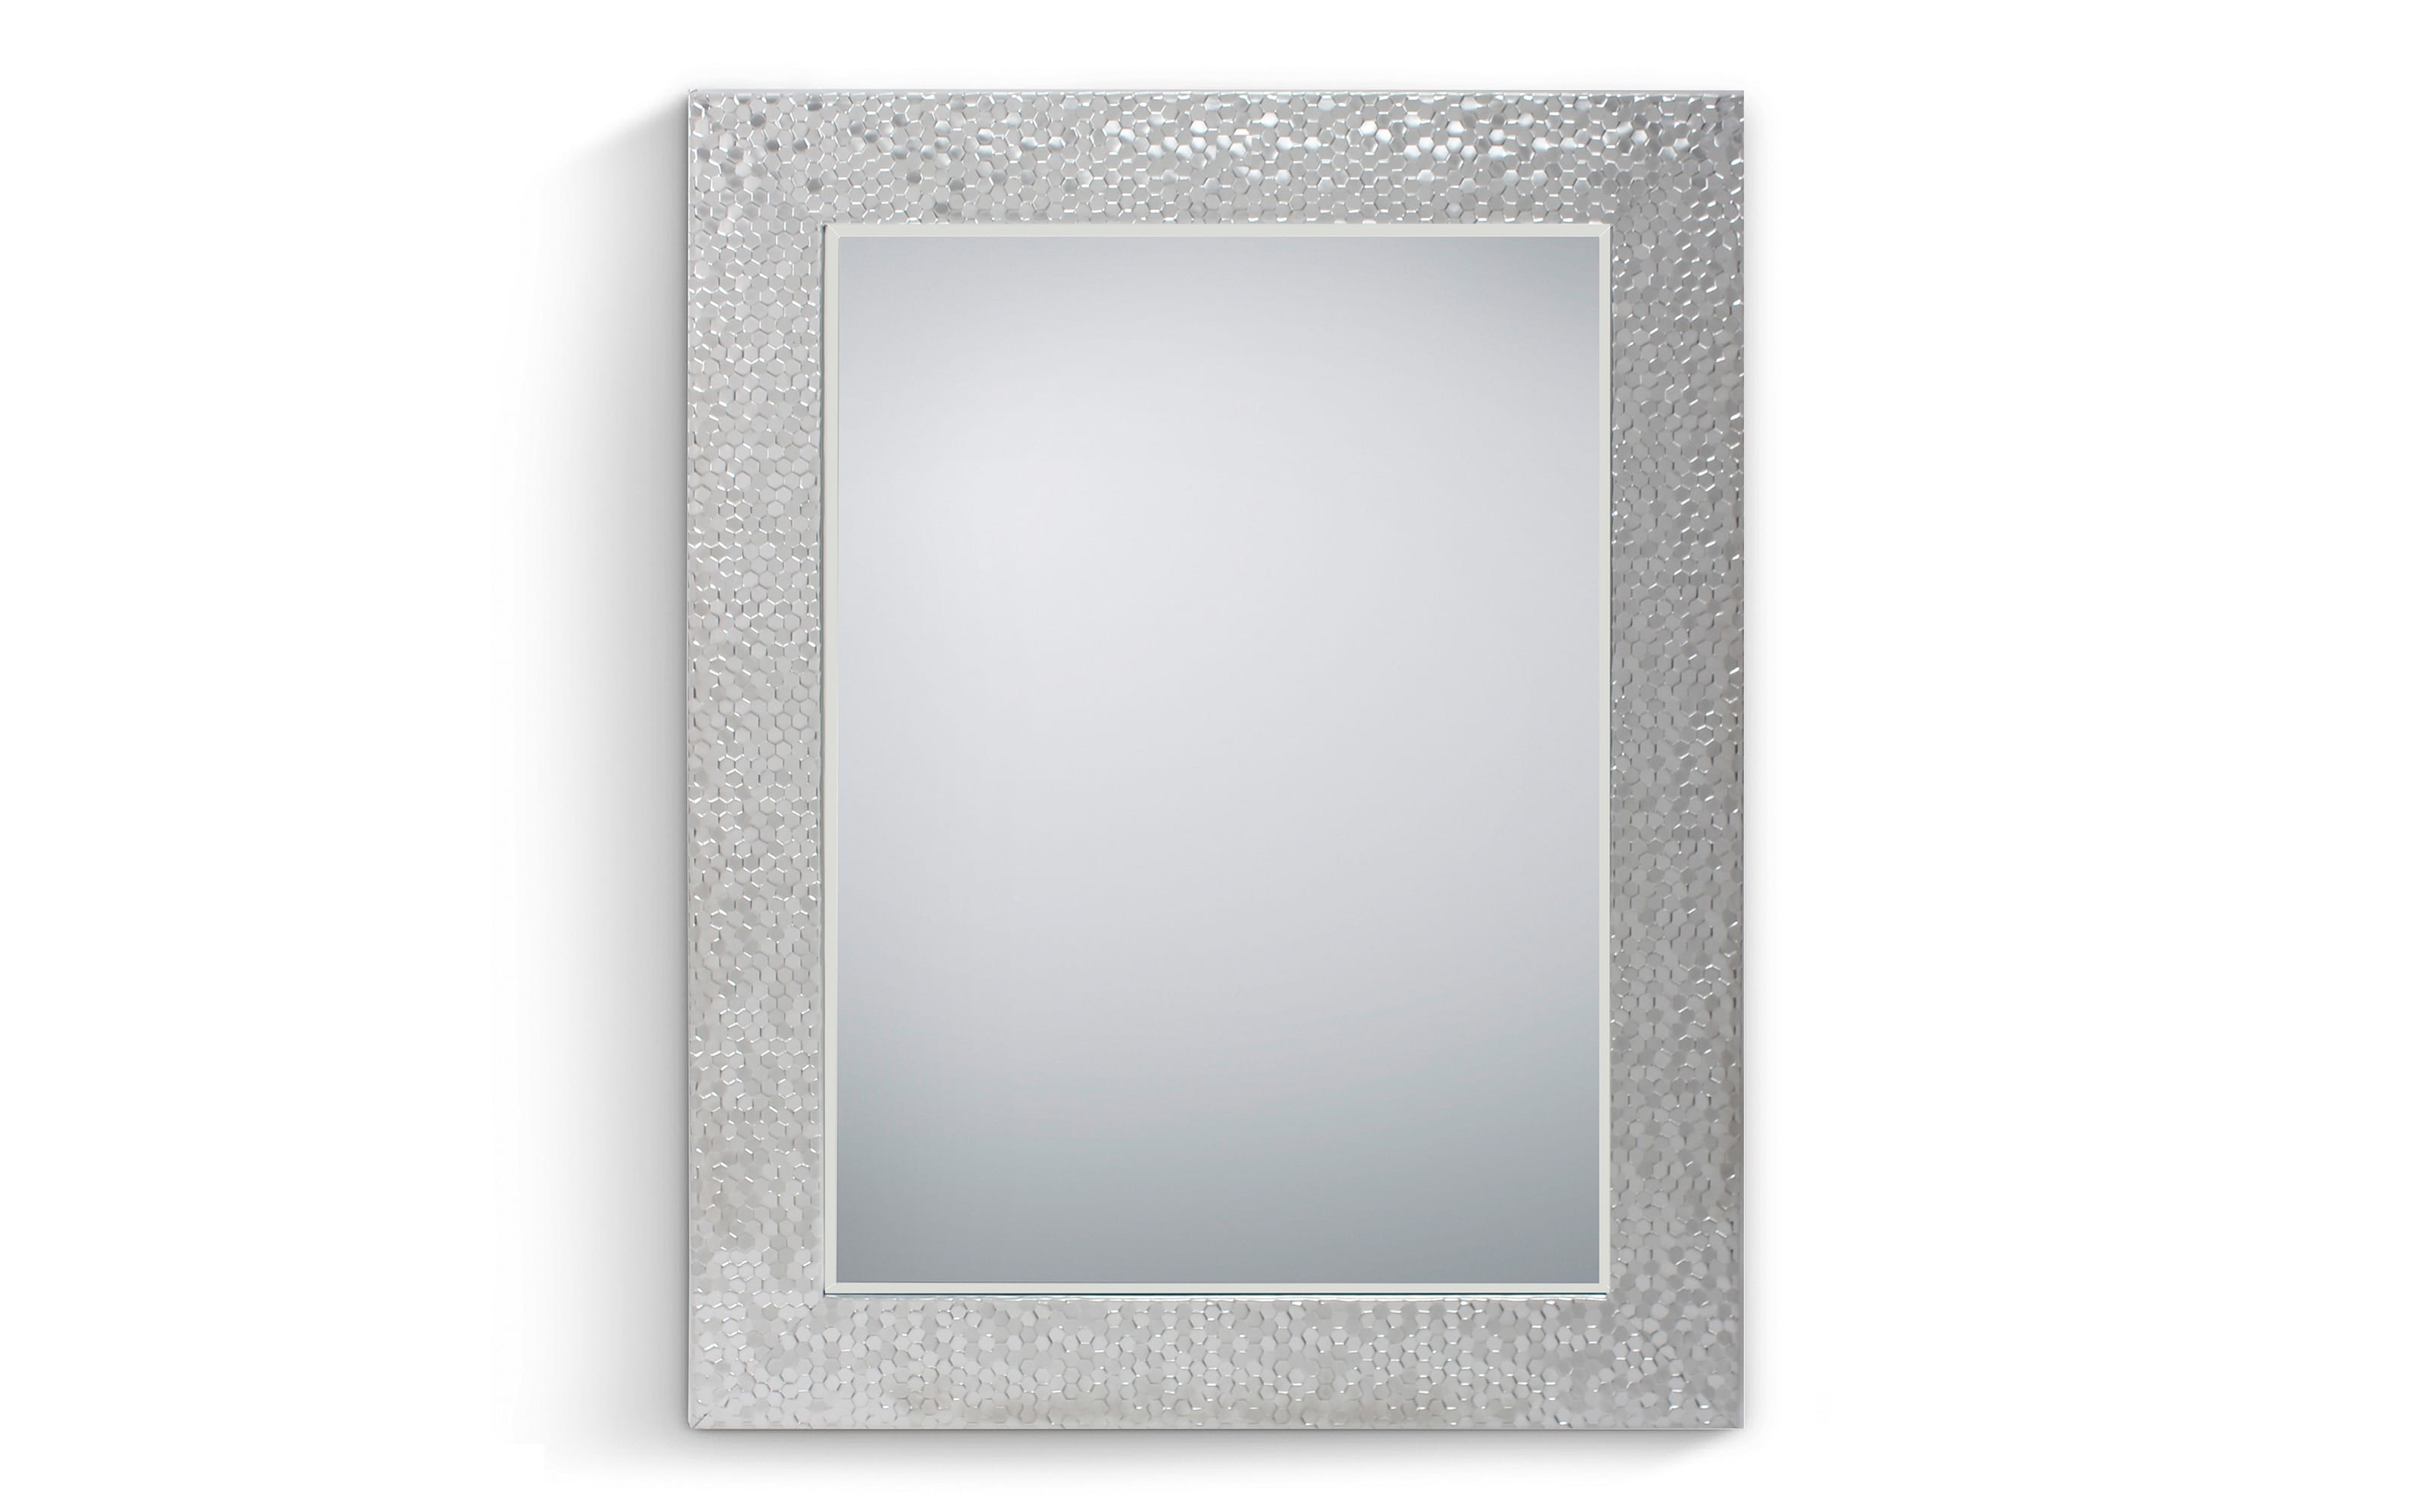 Rahmenspiegel Helena, silberfarbig, 55 x 70 cm 